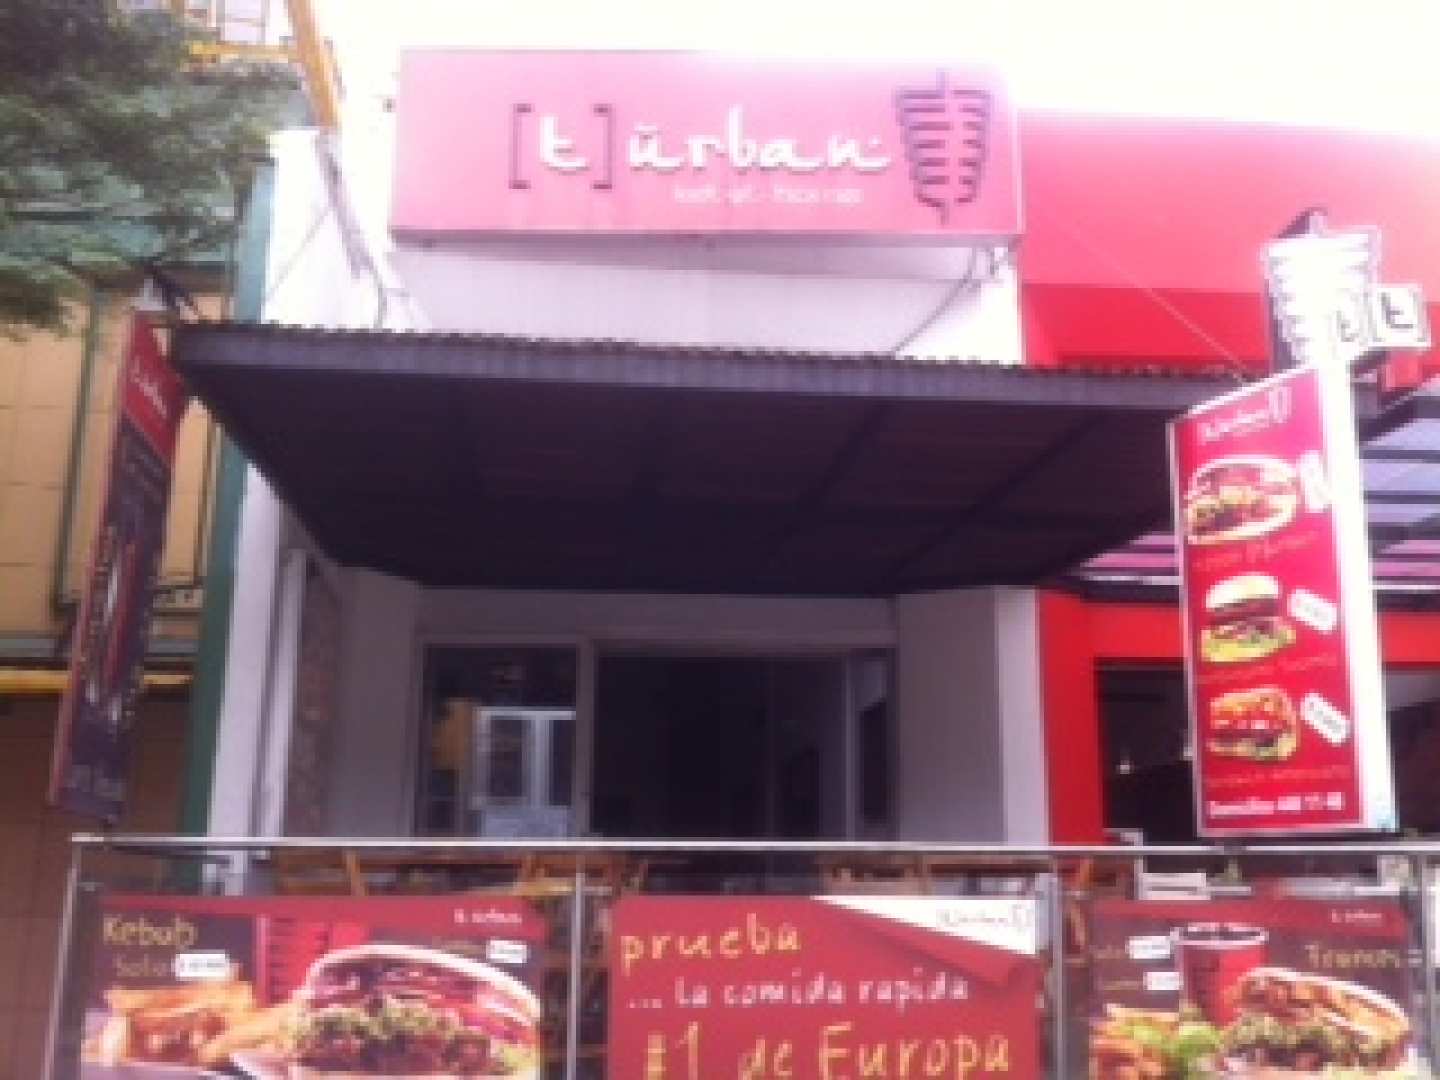 Turban Kebab House